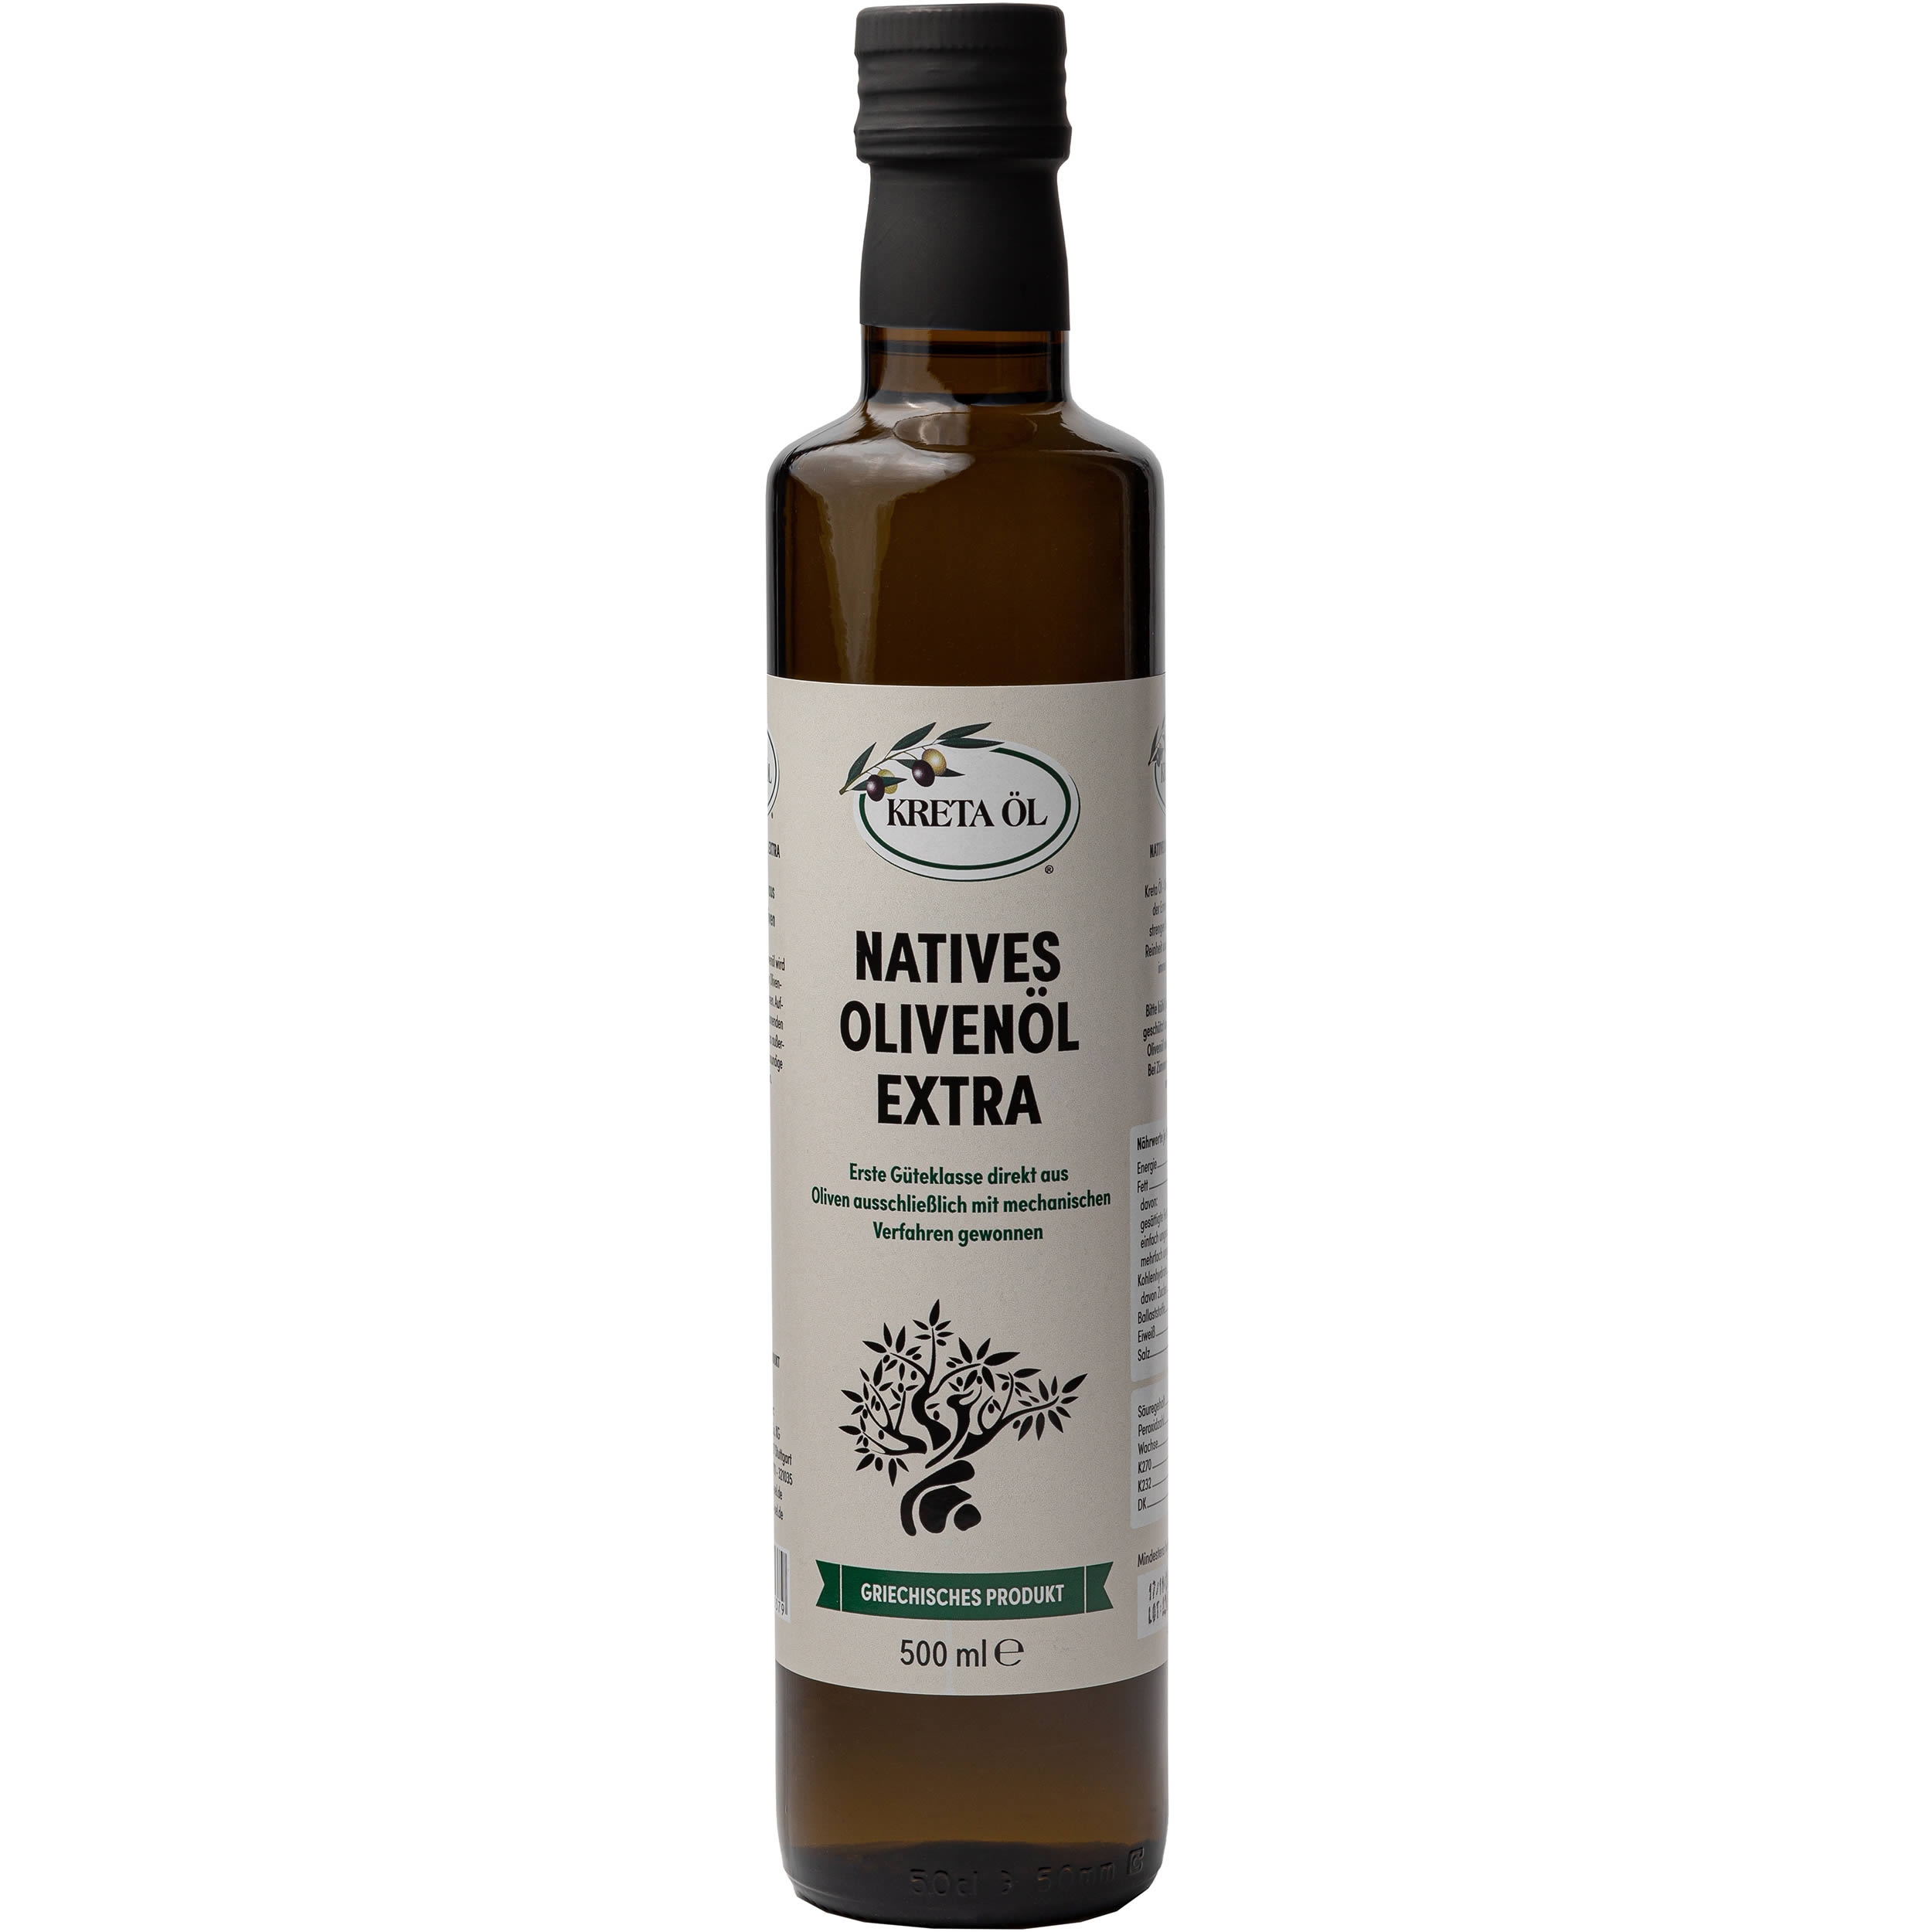 Kreta Öl ® - Extra natives Olivenöl max. 0.6 % Säuregehalt 500 ml